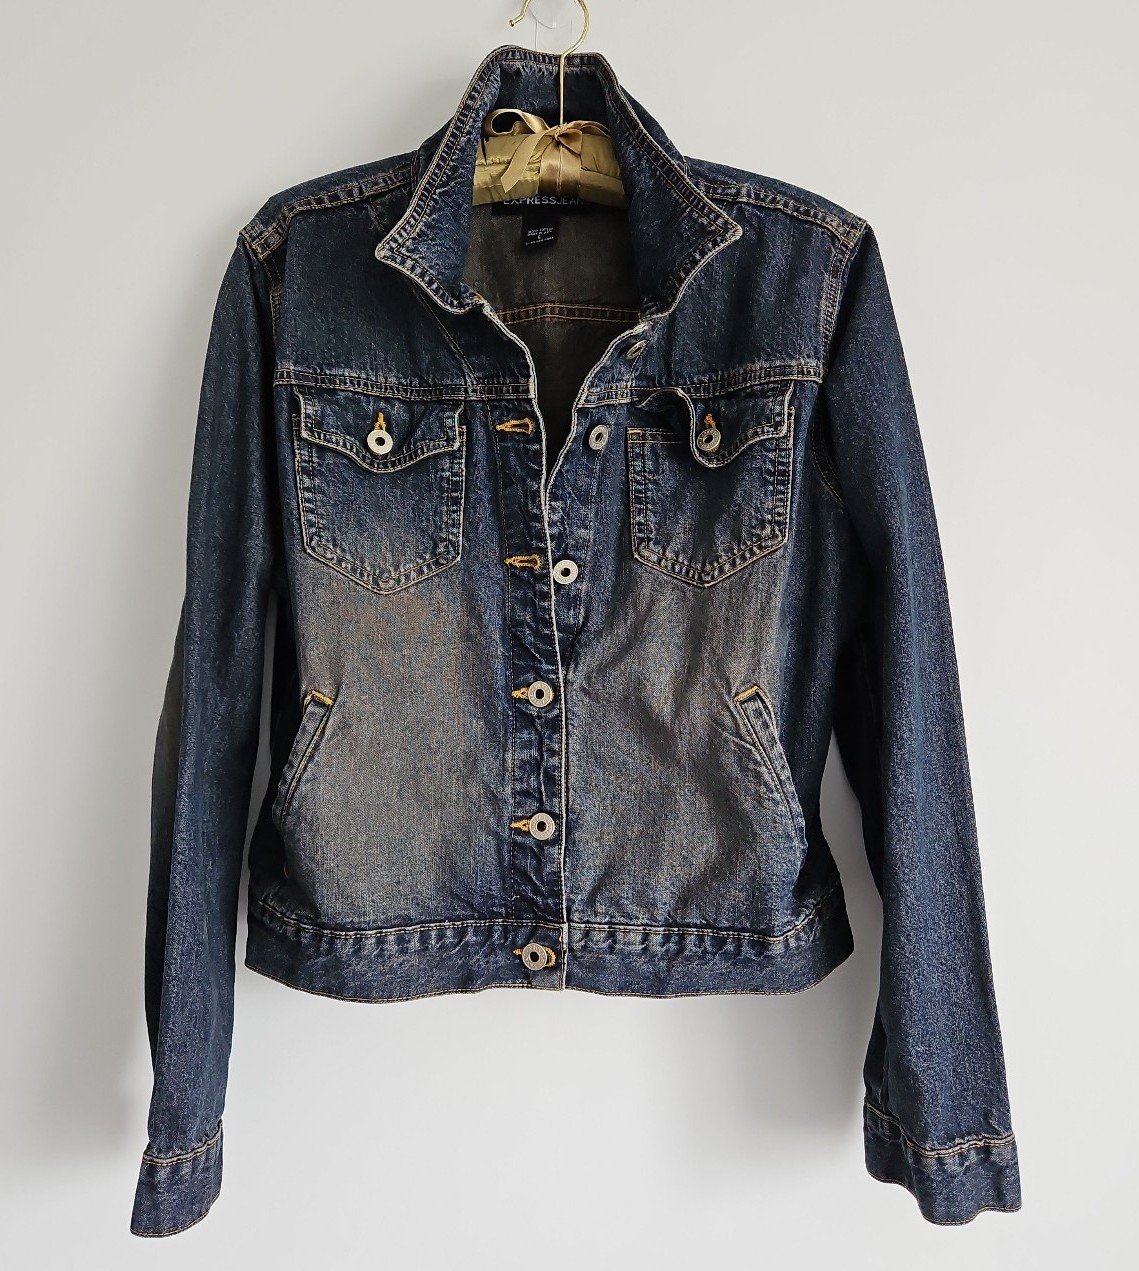 Discounted Express Jeans denim jacket iDcbcAH0n online 